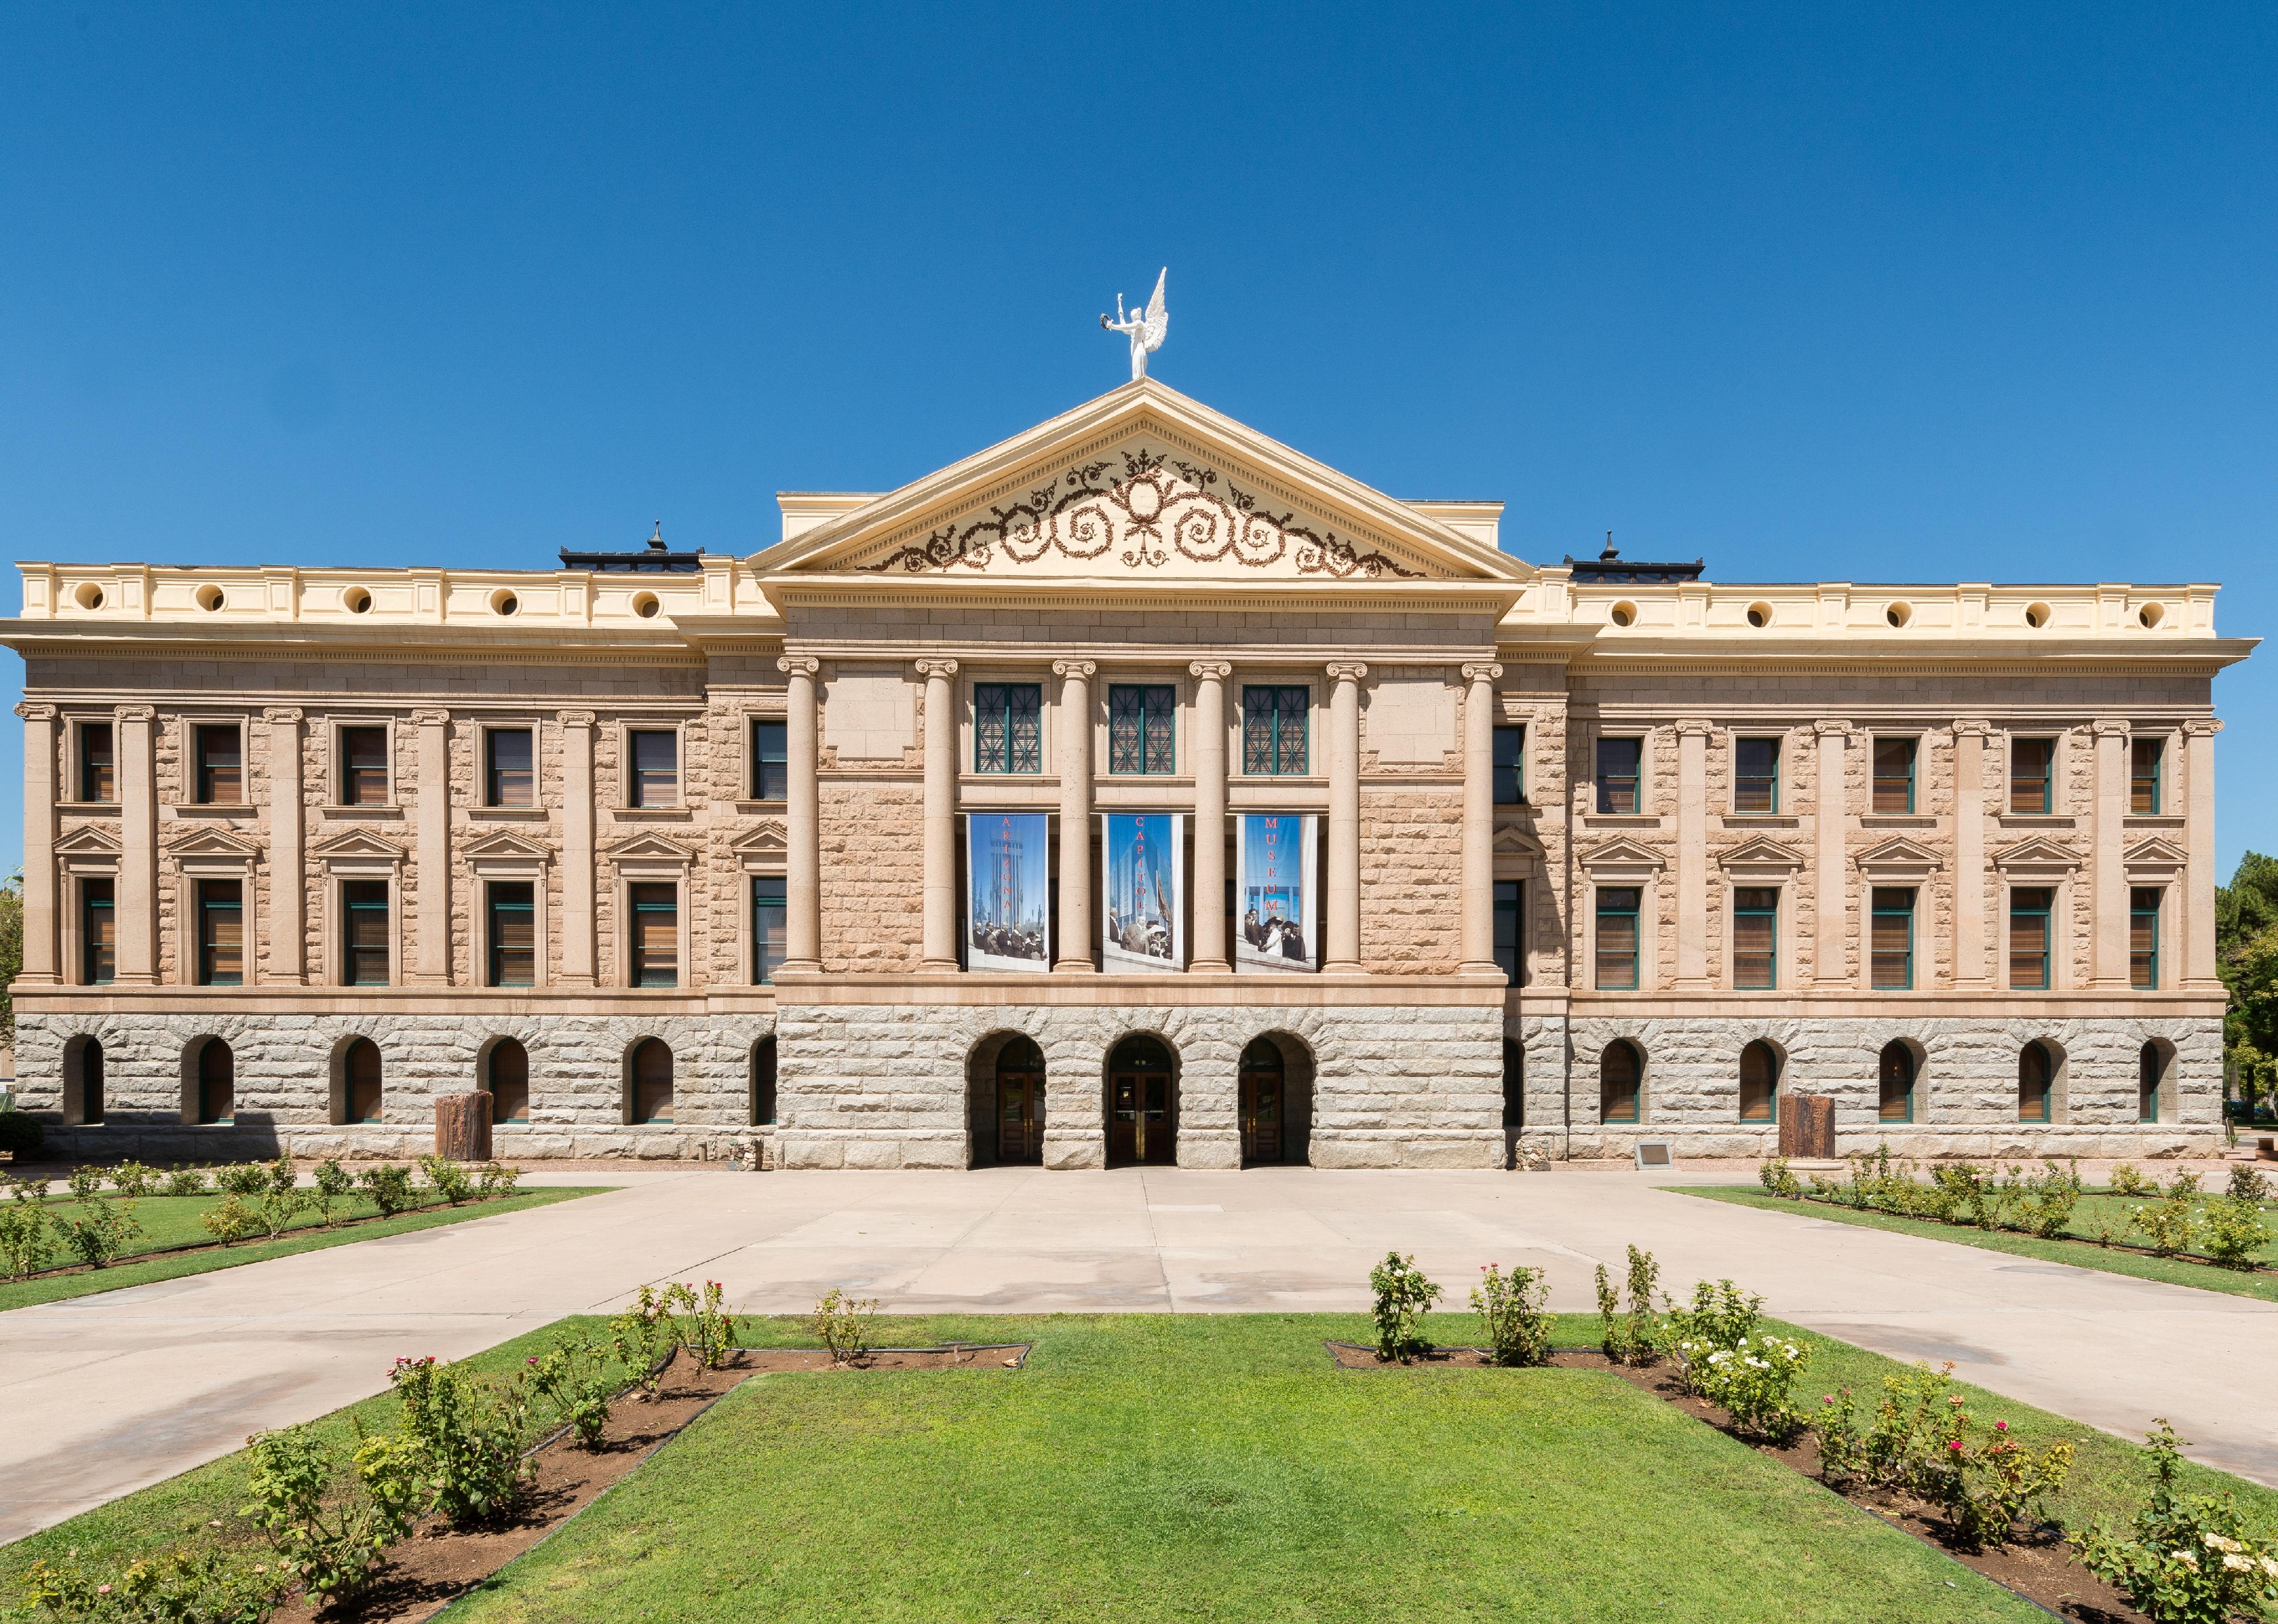 Original Arizona State Capitol building in Phoenix, Arizona.